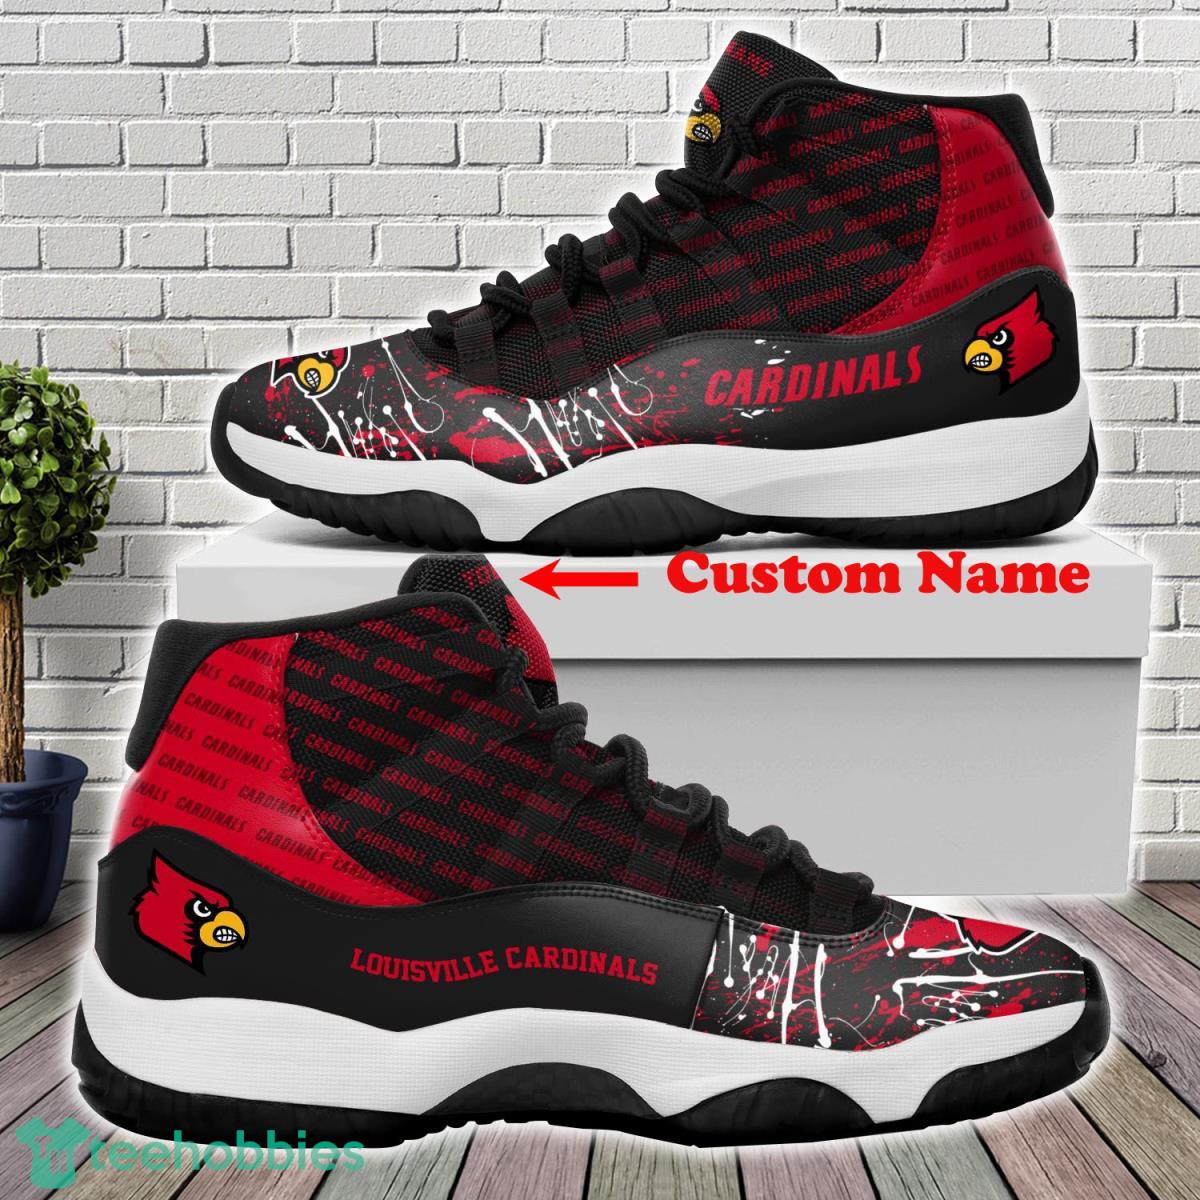 Louisville Cardinals Custom Name Air Jordan 11 Sneakers For Fans Product Photo 1